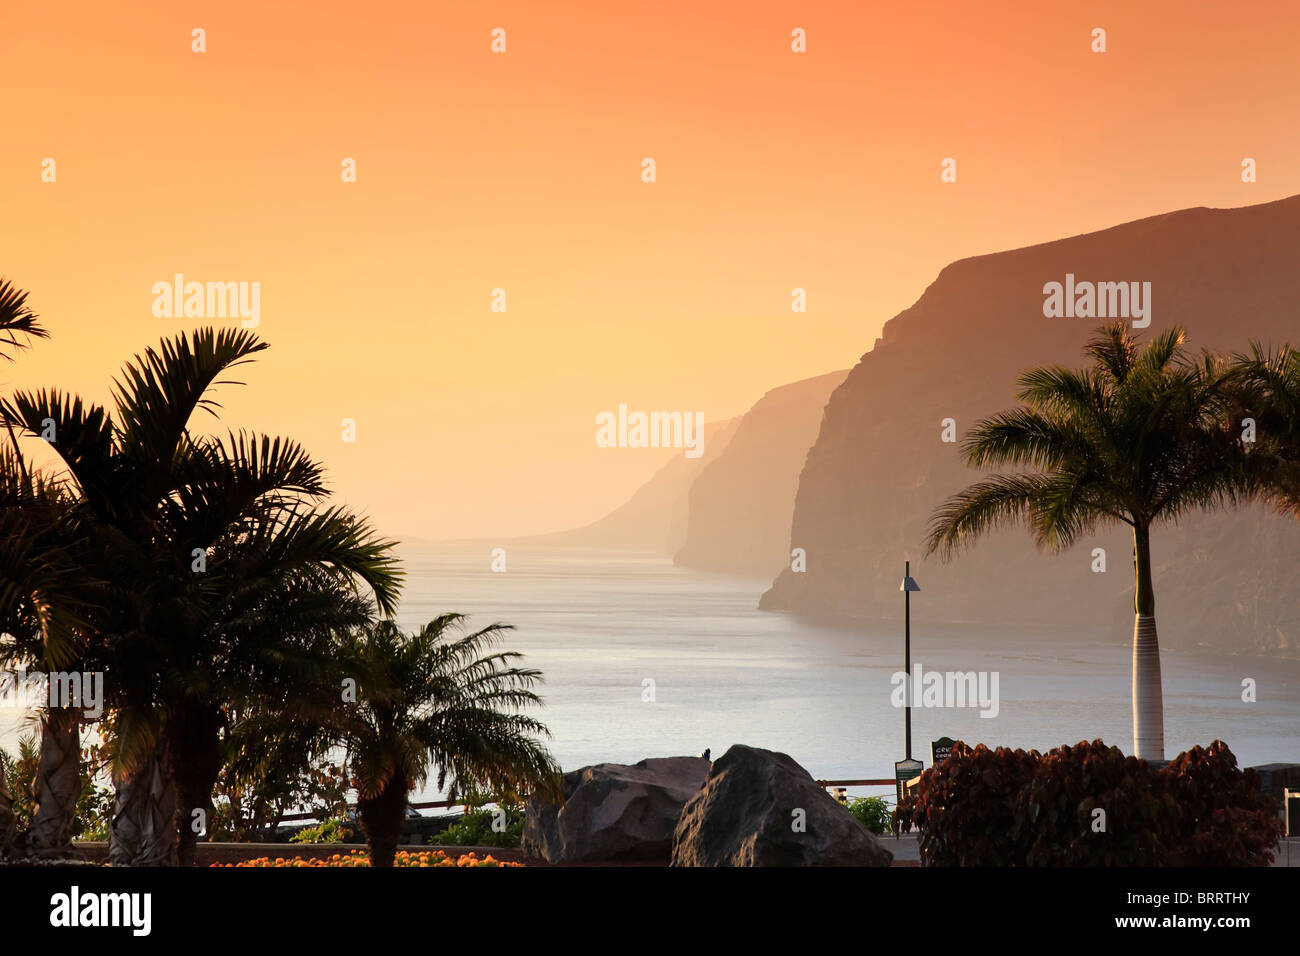 Canary Islands, Tenerife, Costa Adeje, Acantilado de Los Gigantes (Cliffs of the Giants) Stock Photo